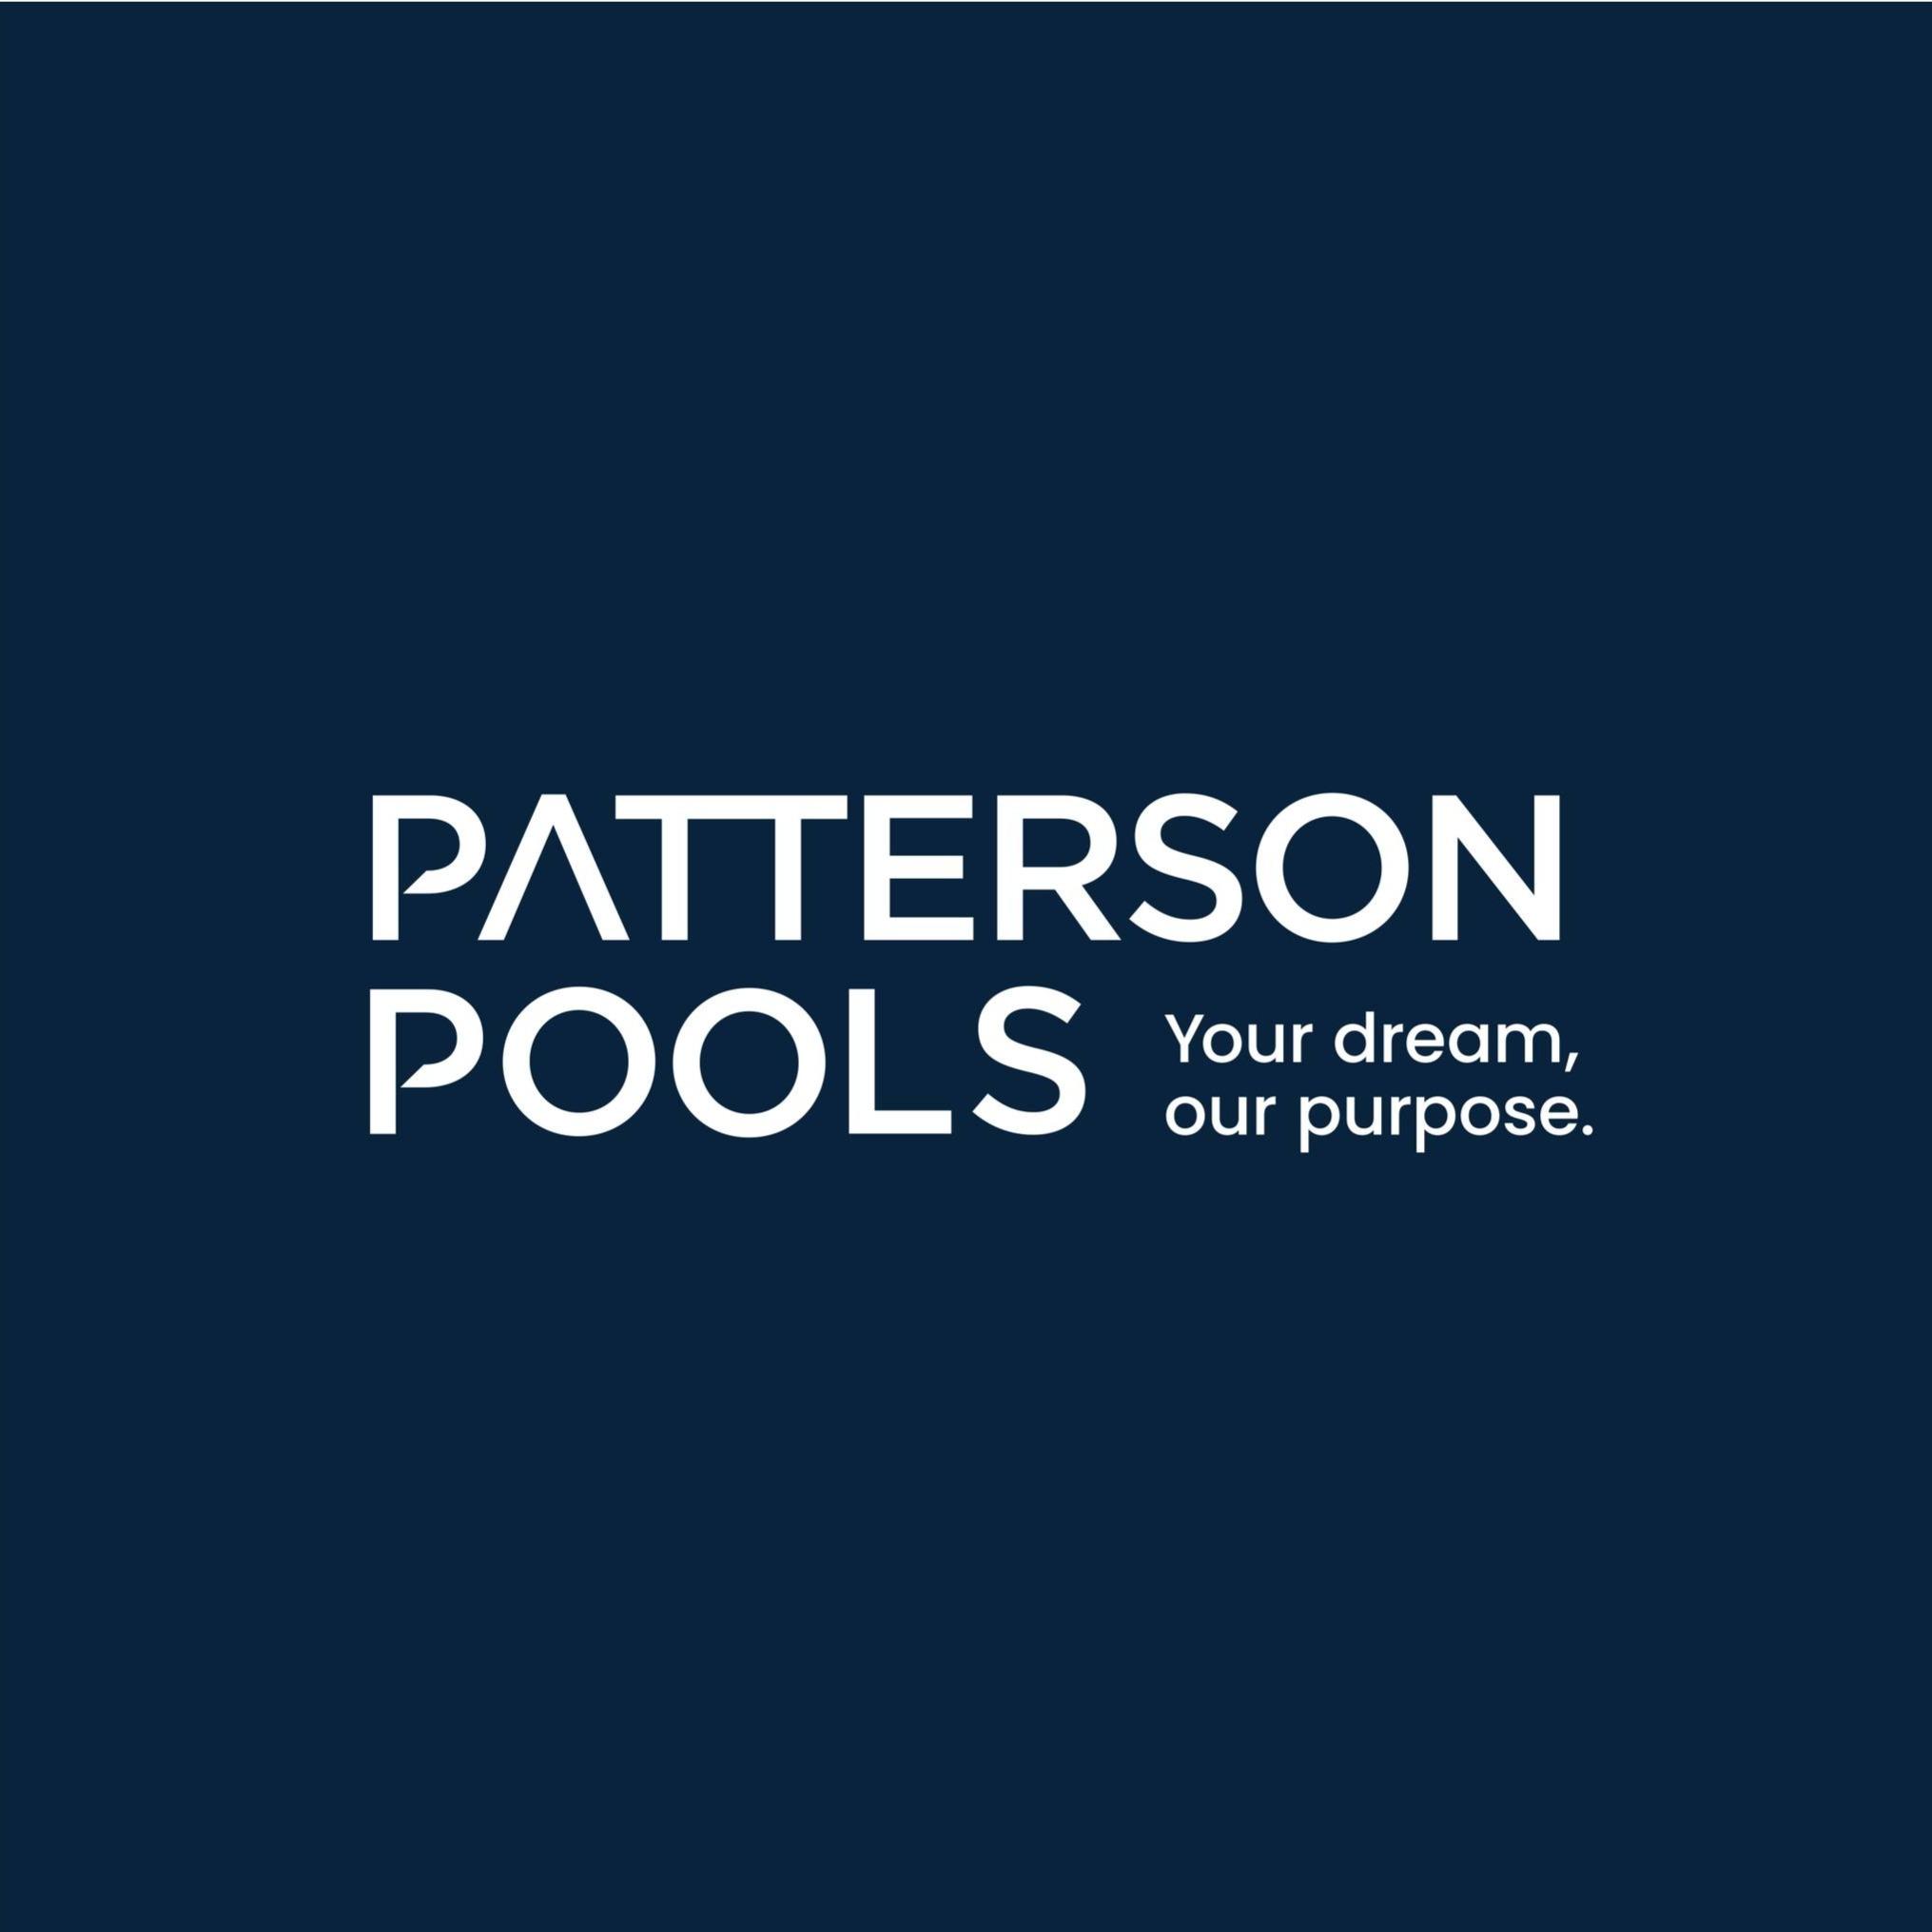 custom pool builder sydney Patterson Pools Kenthurst (02) 8046 1311